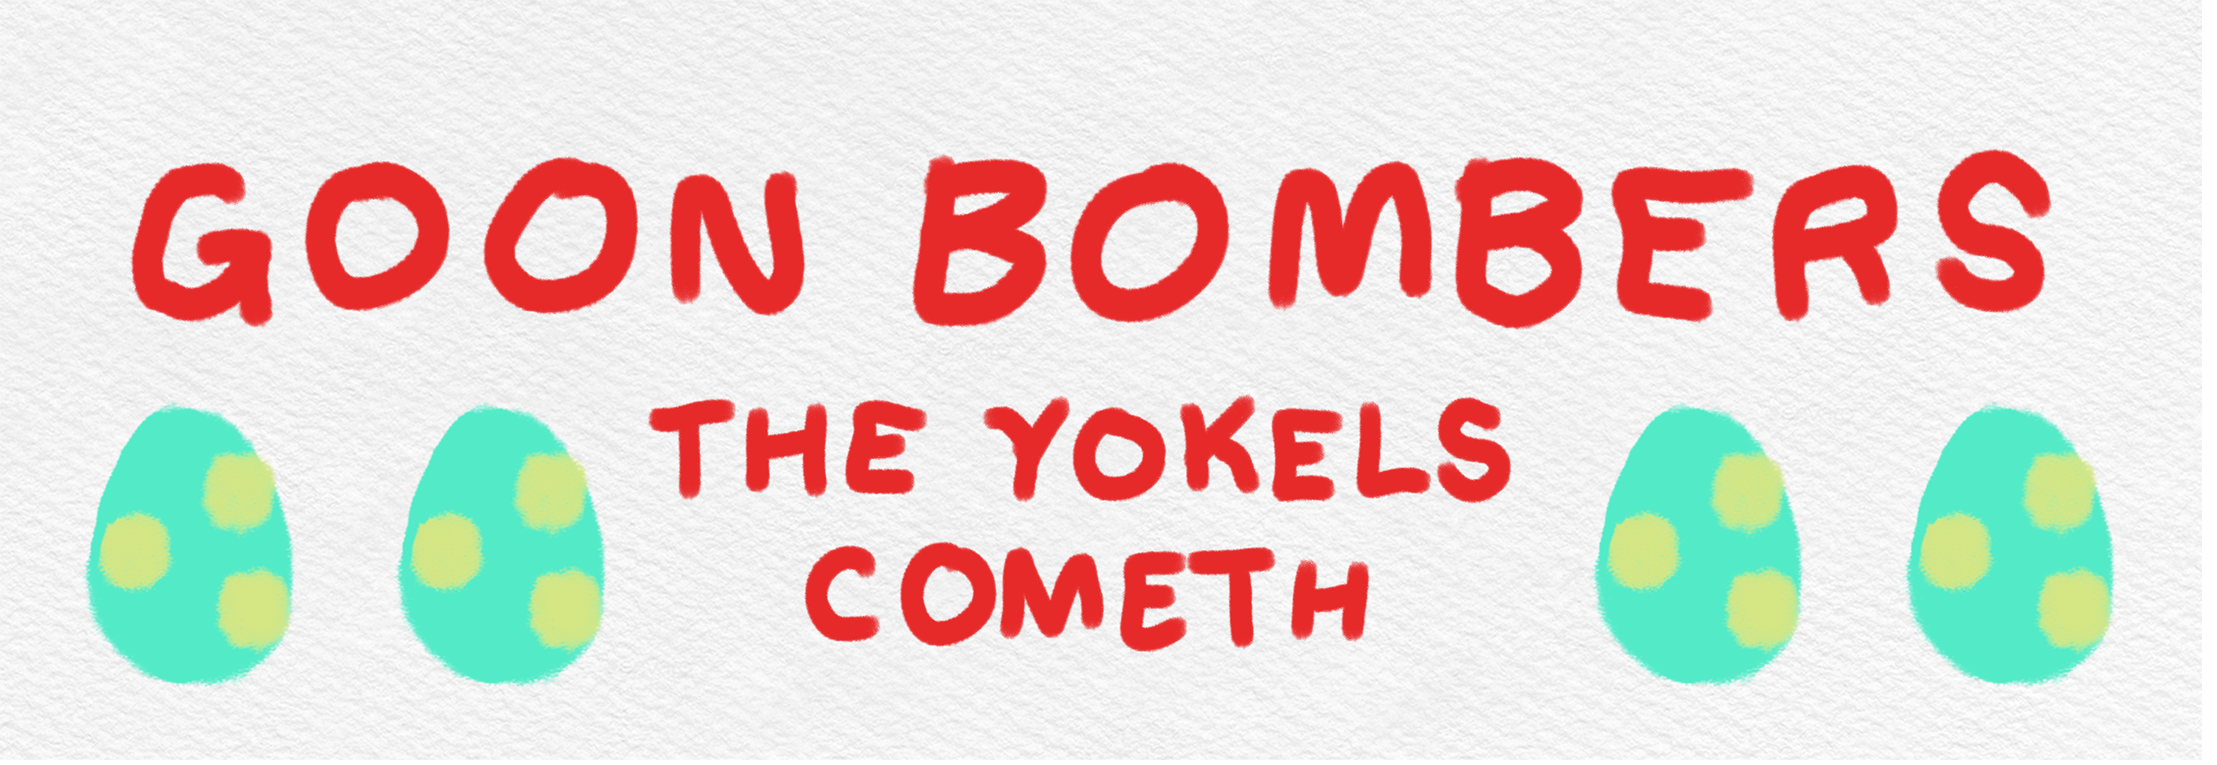 Goon Bomber, The Yokels Cometh